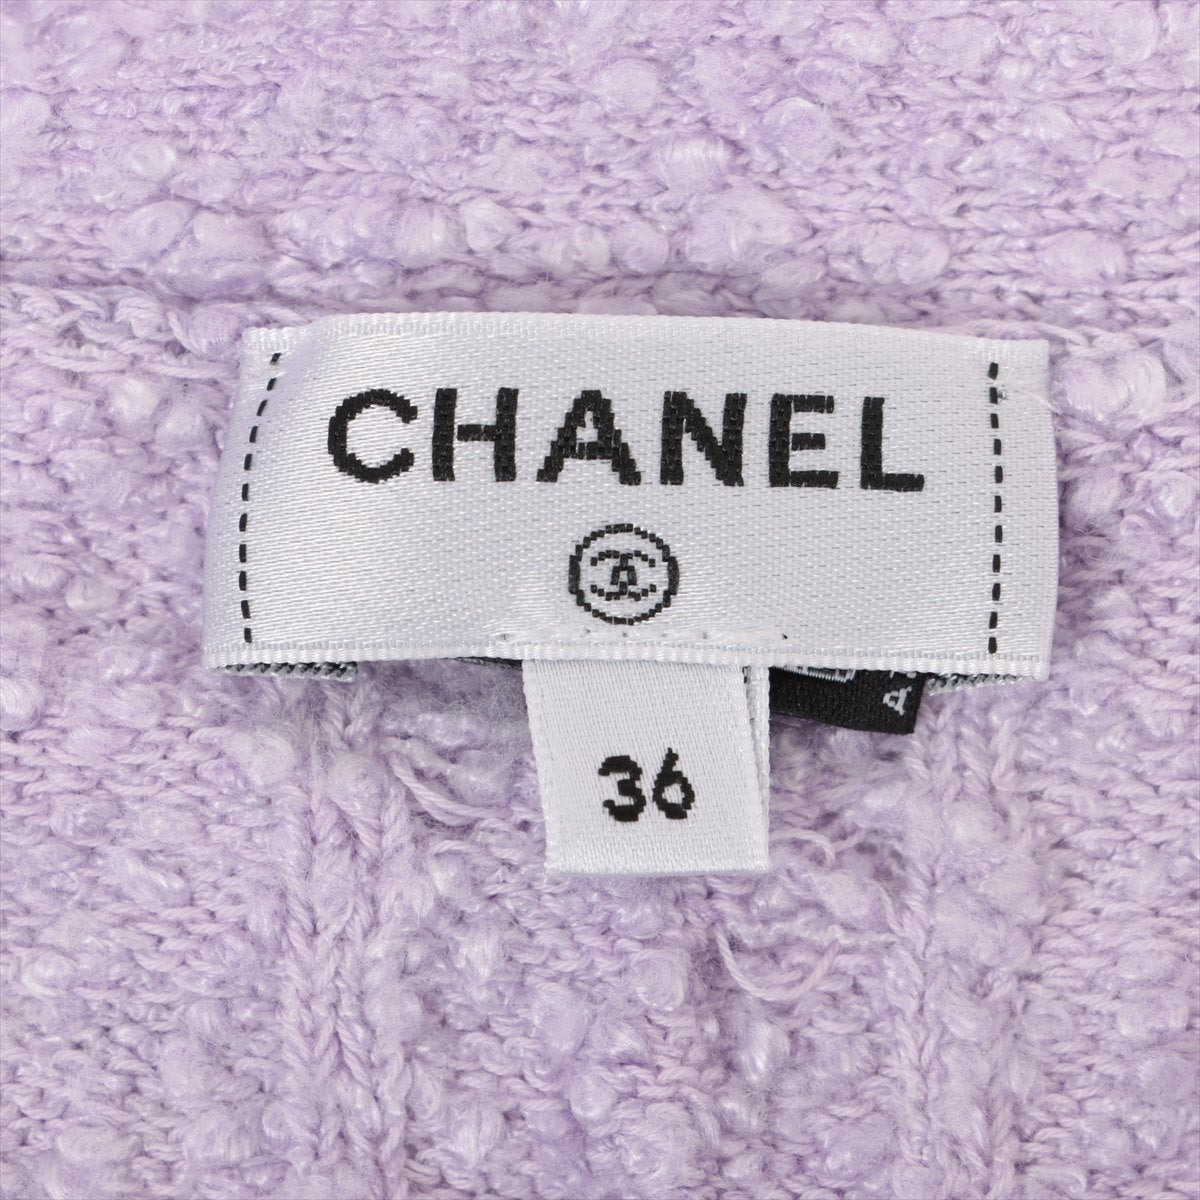 Chanel P72 Cotton x Leion Cardigan 36  Pearl Lion Button